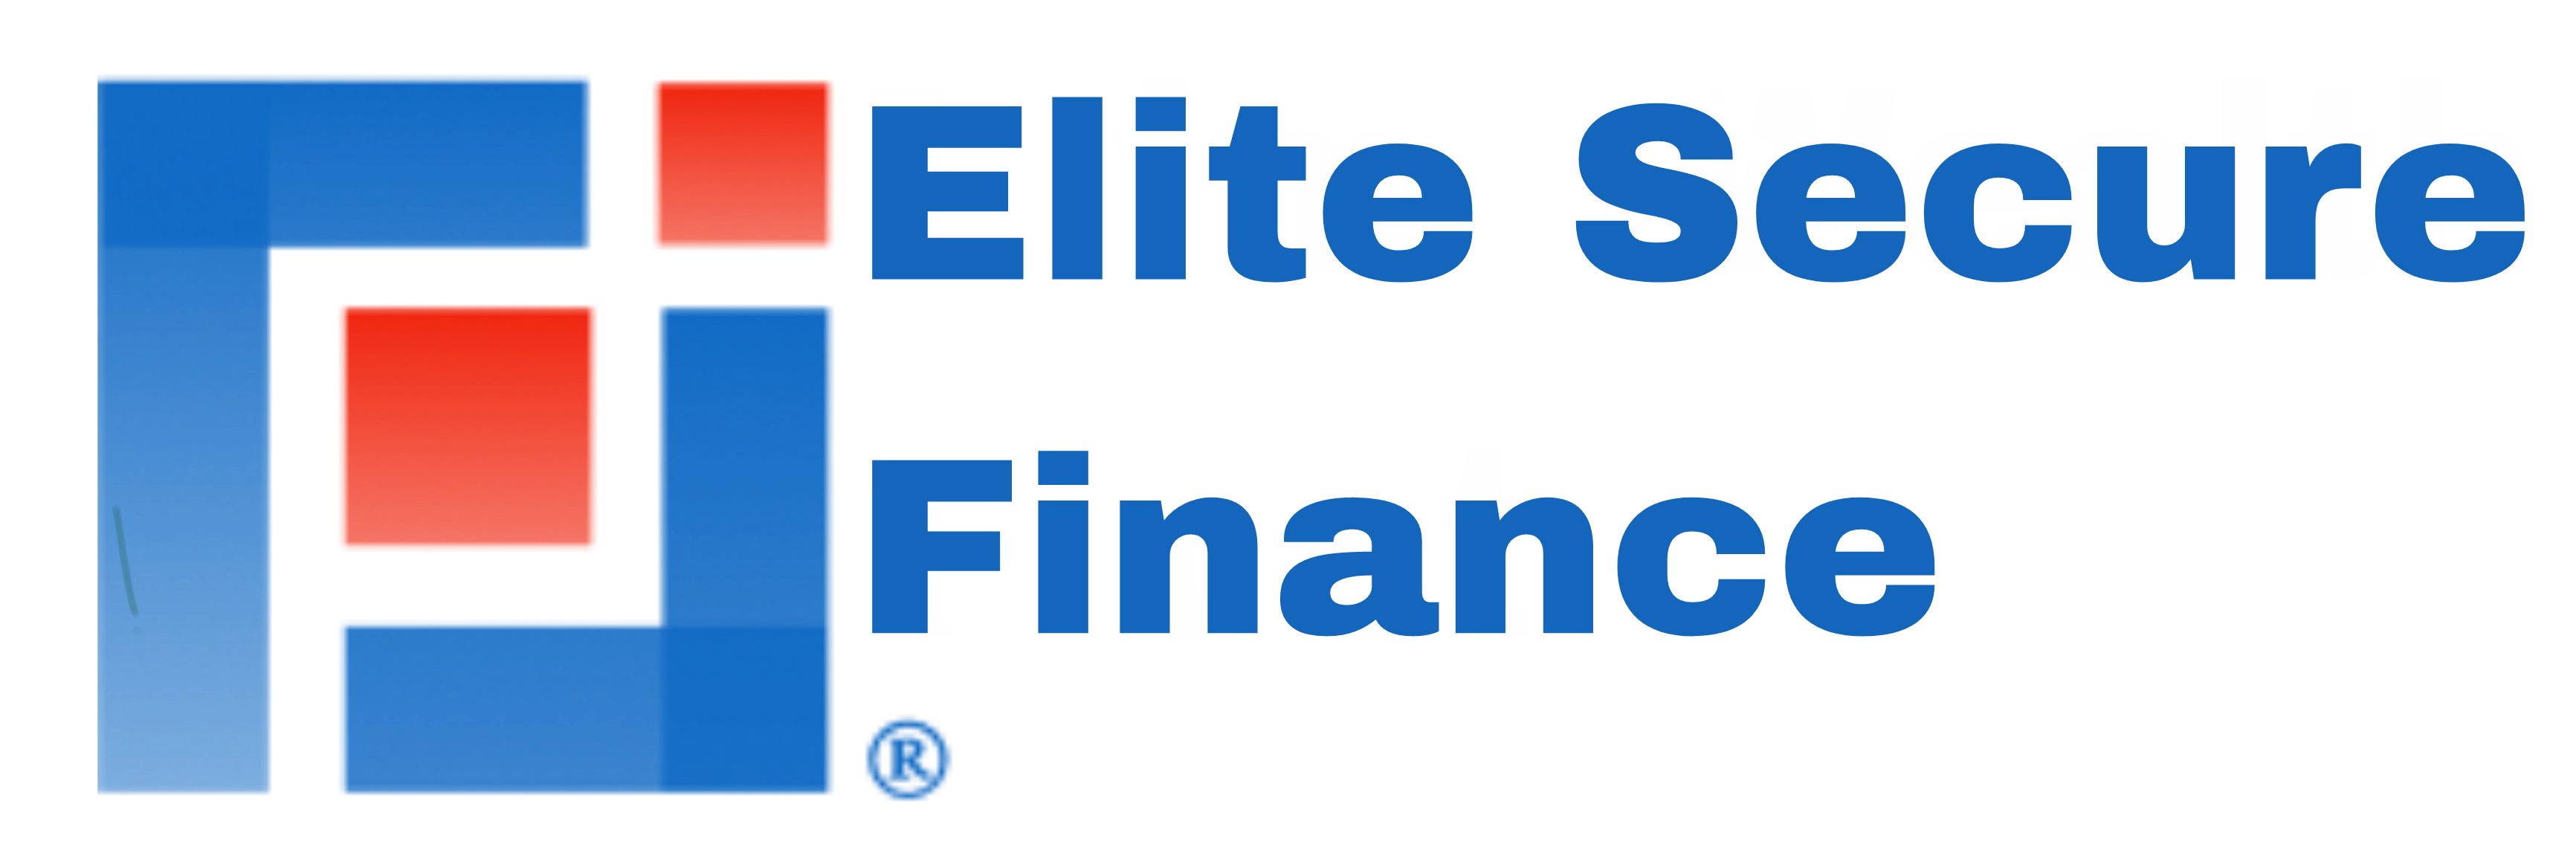 Elite Secure Finance  